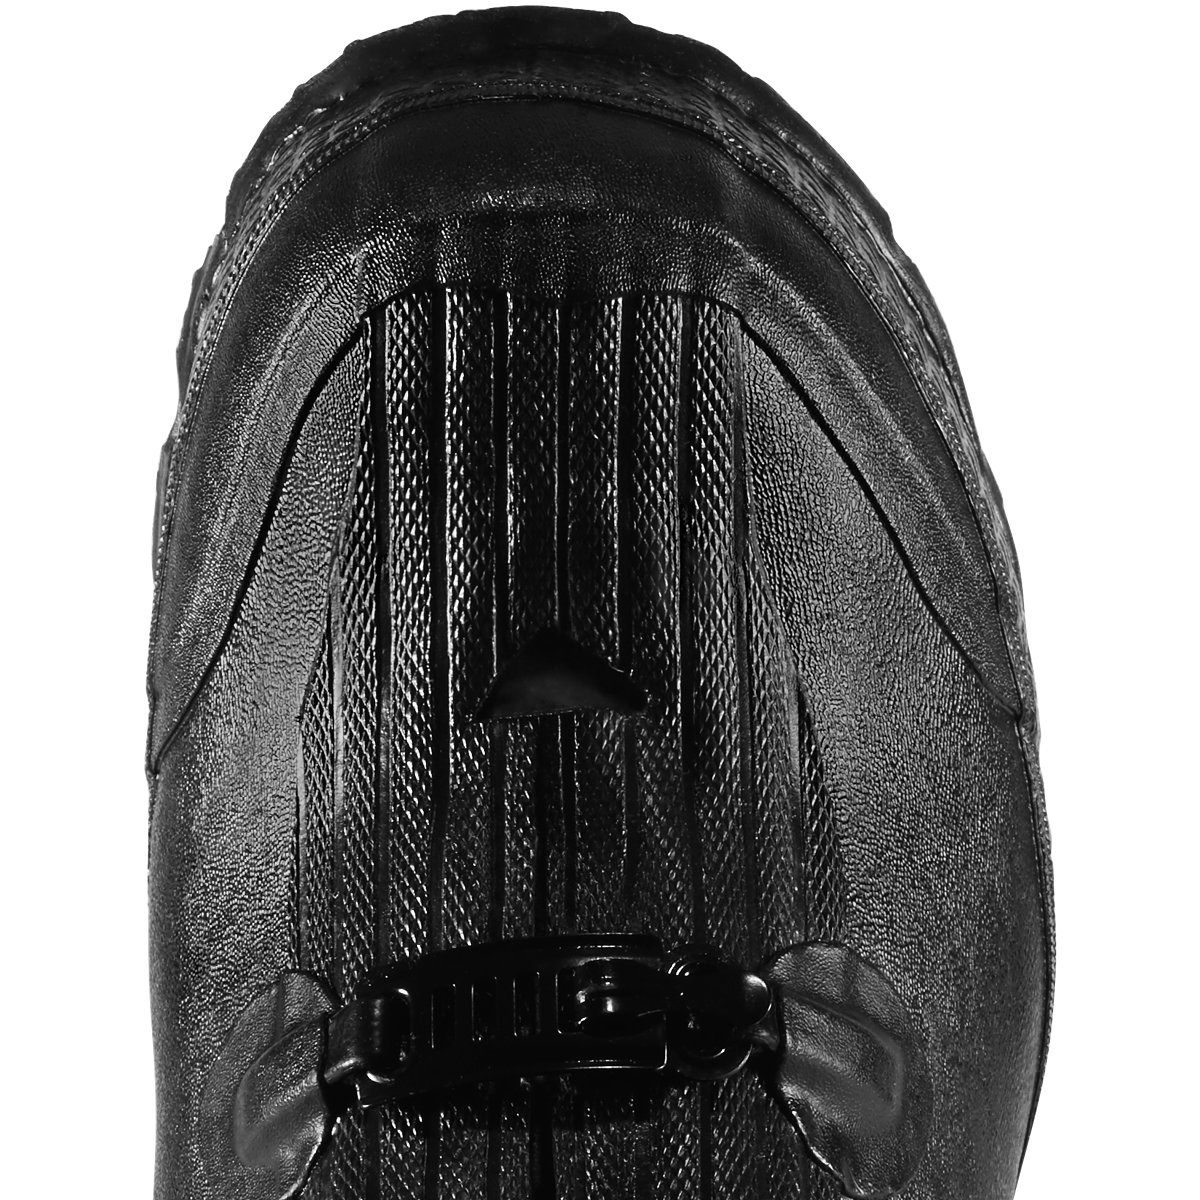 Z Series Overshoe 11" Black